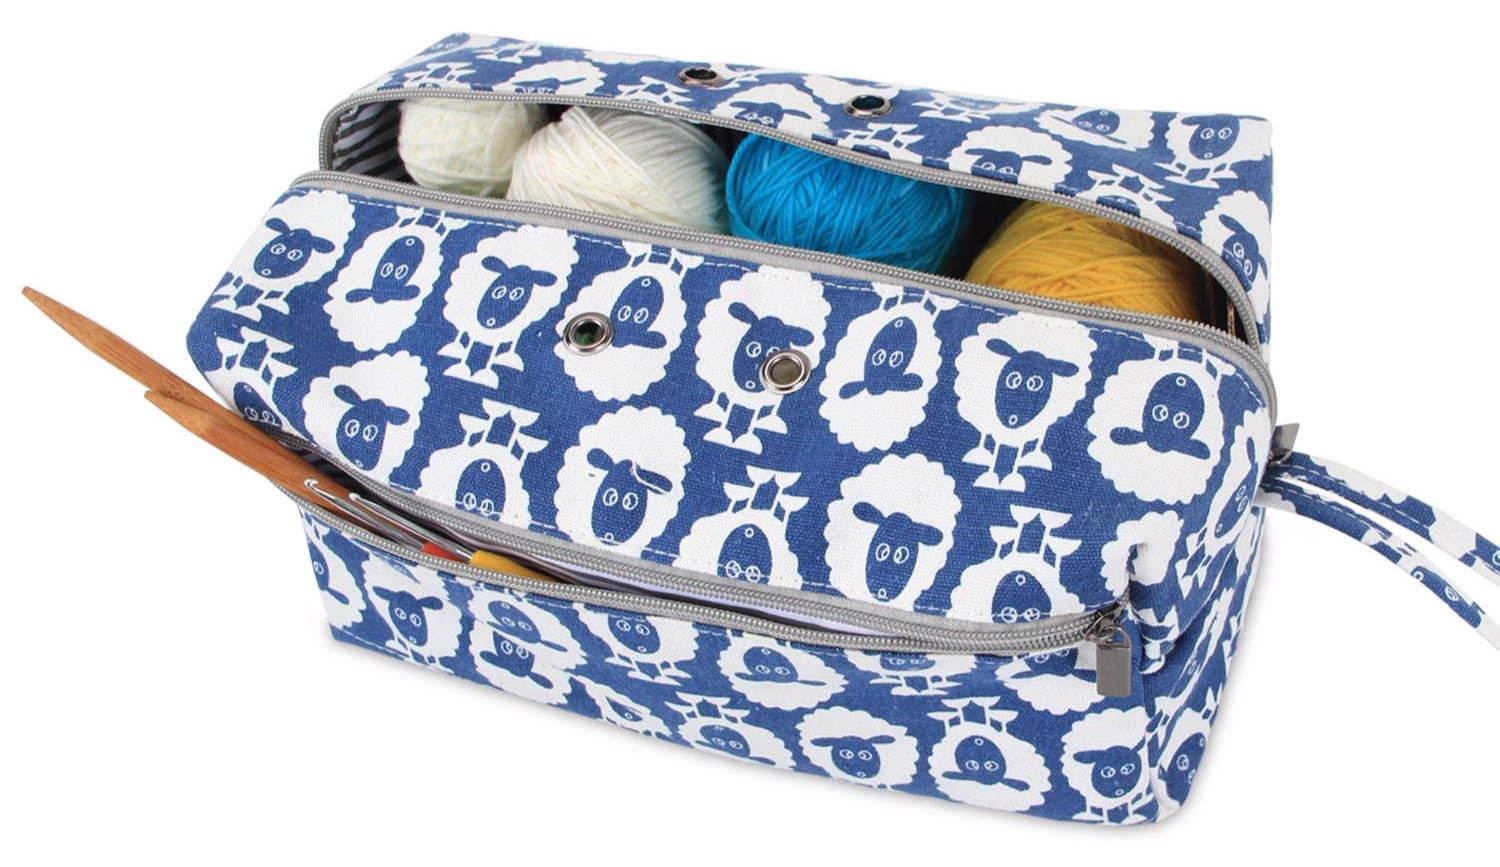 Knitting Wrist Bag Canvas Yarn Organizer Small Knitting Projects Bag Travel Size 